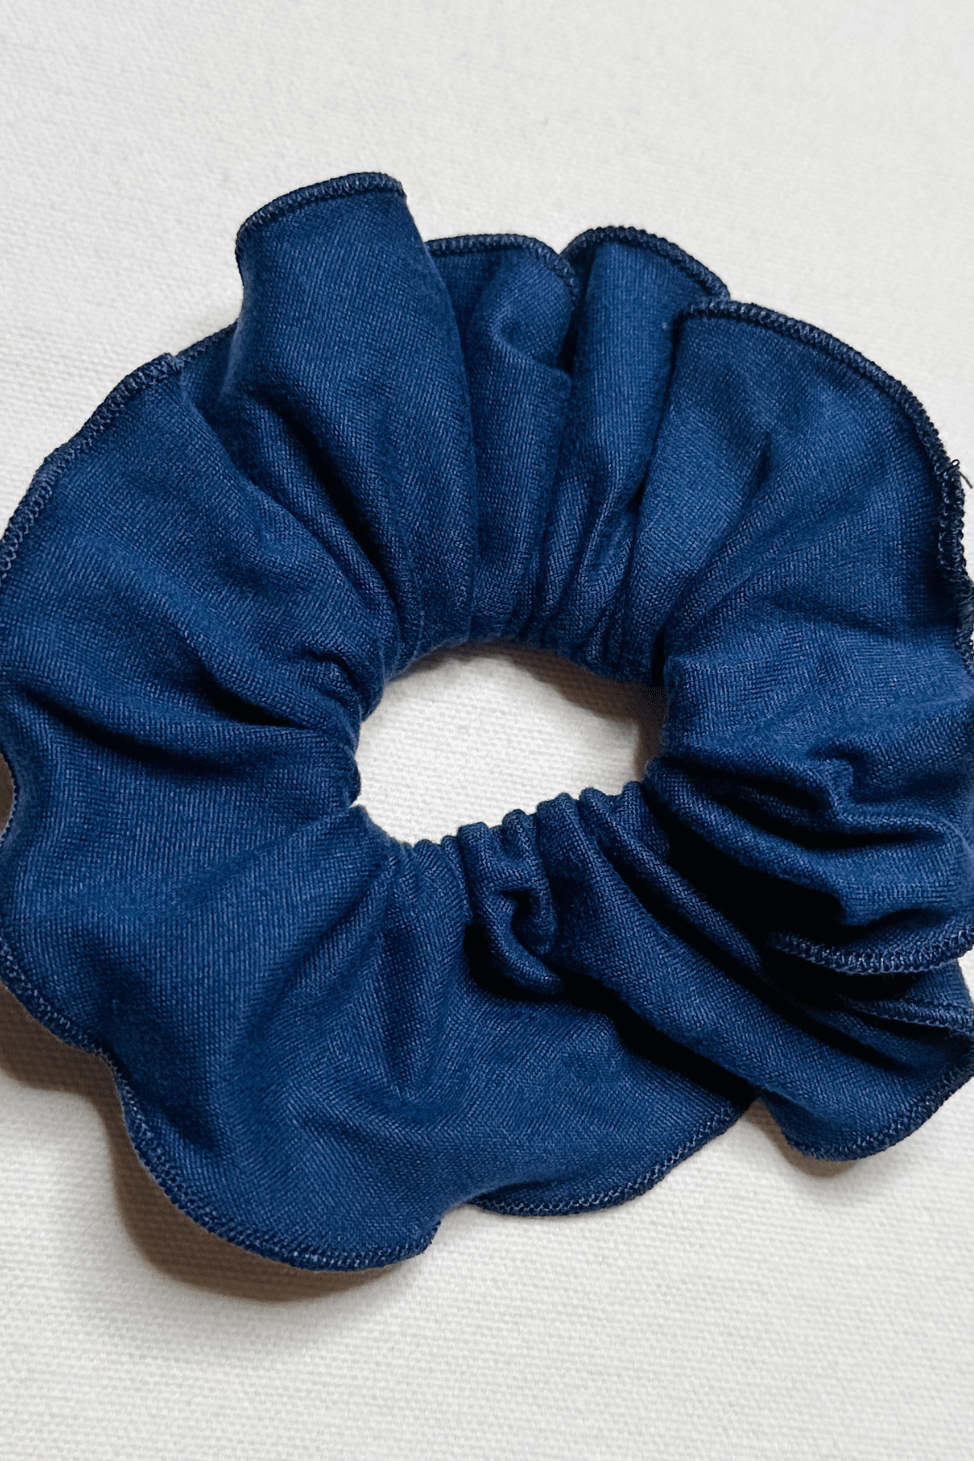 Scrunchie in Navy color from Diane Kroe